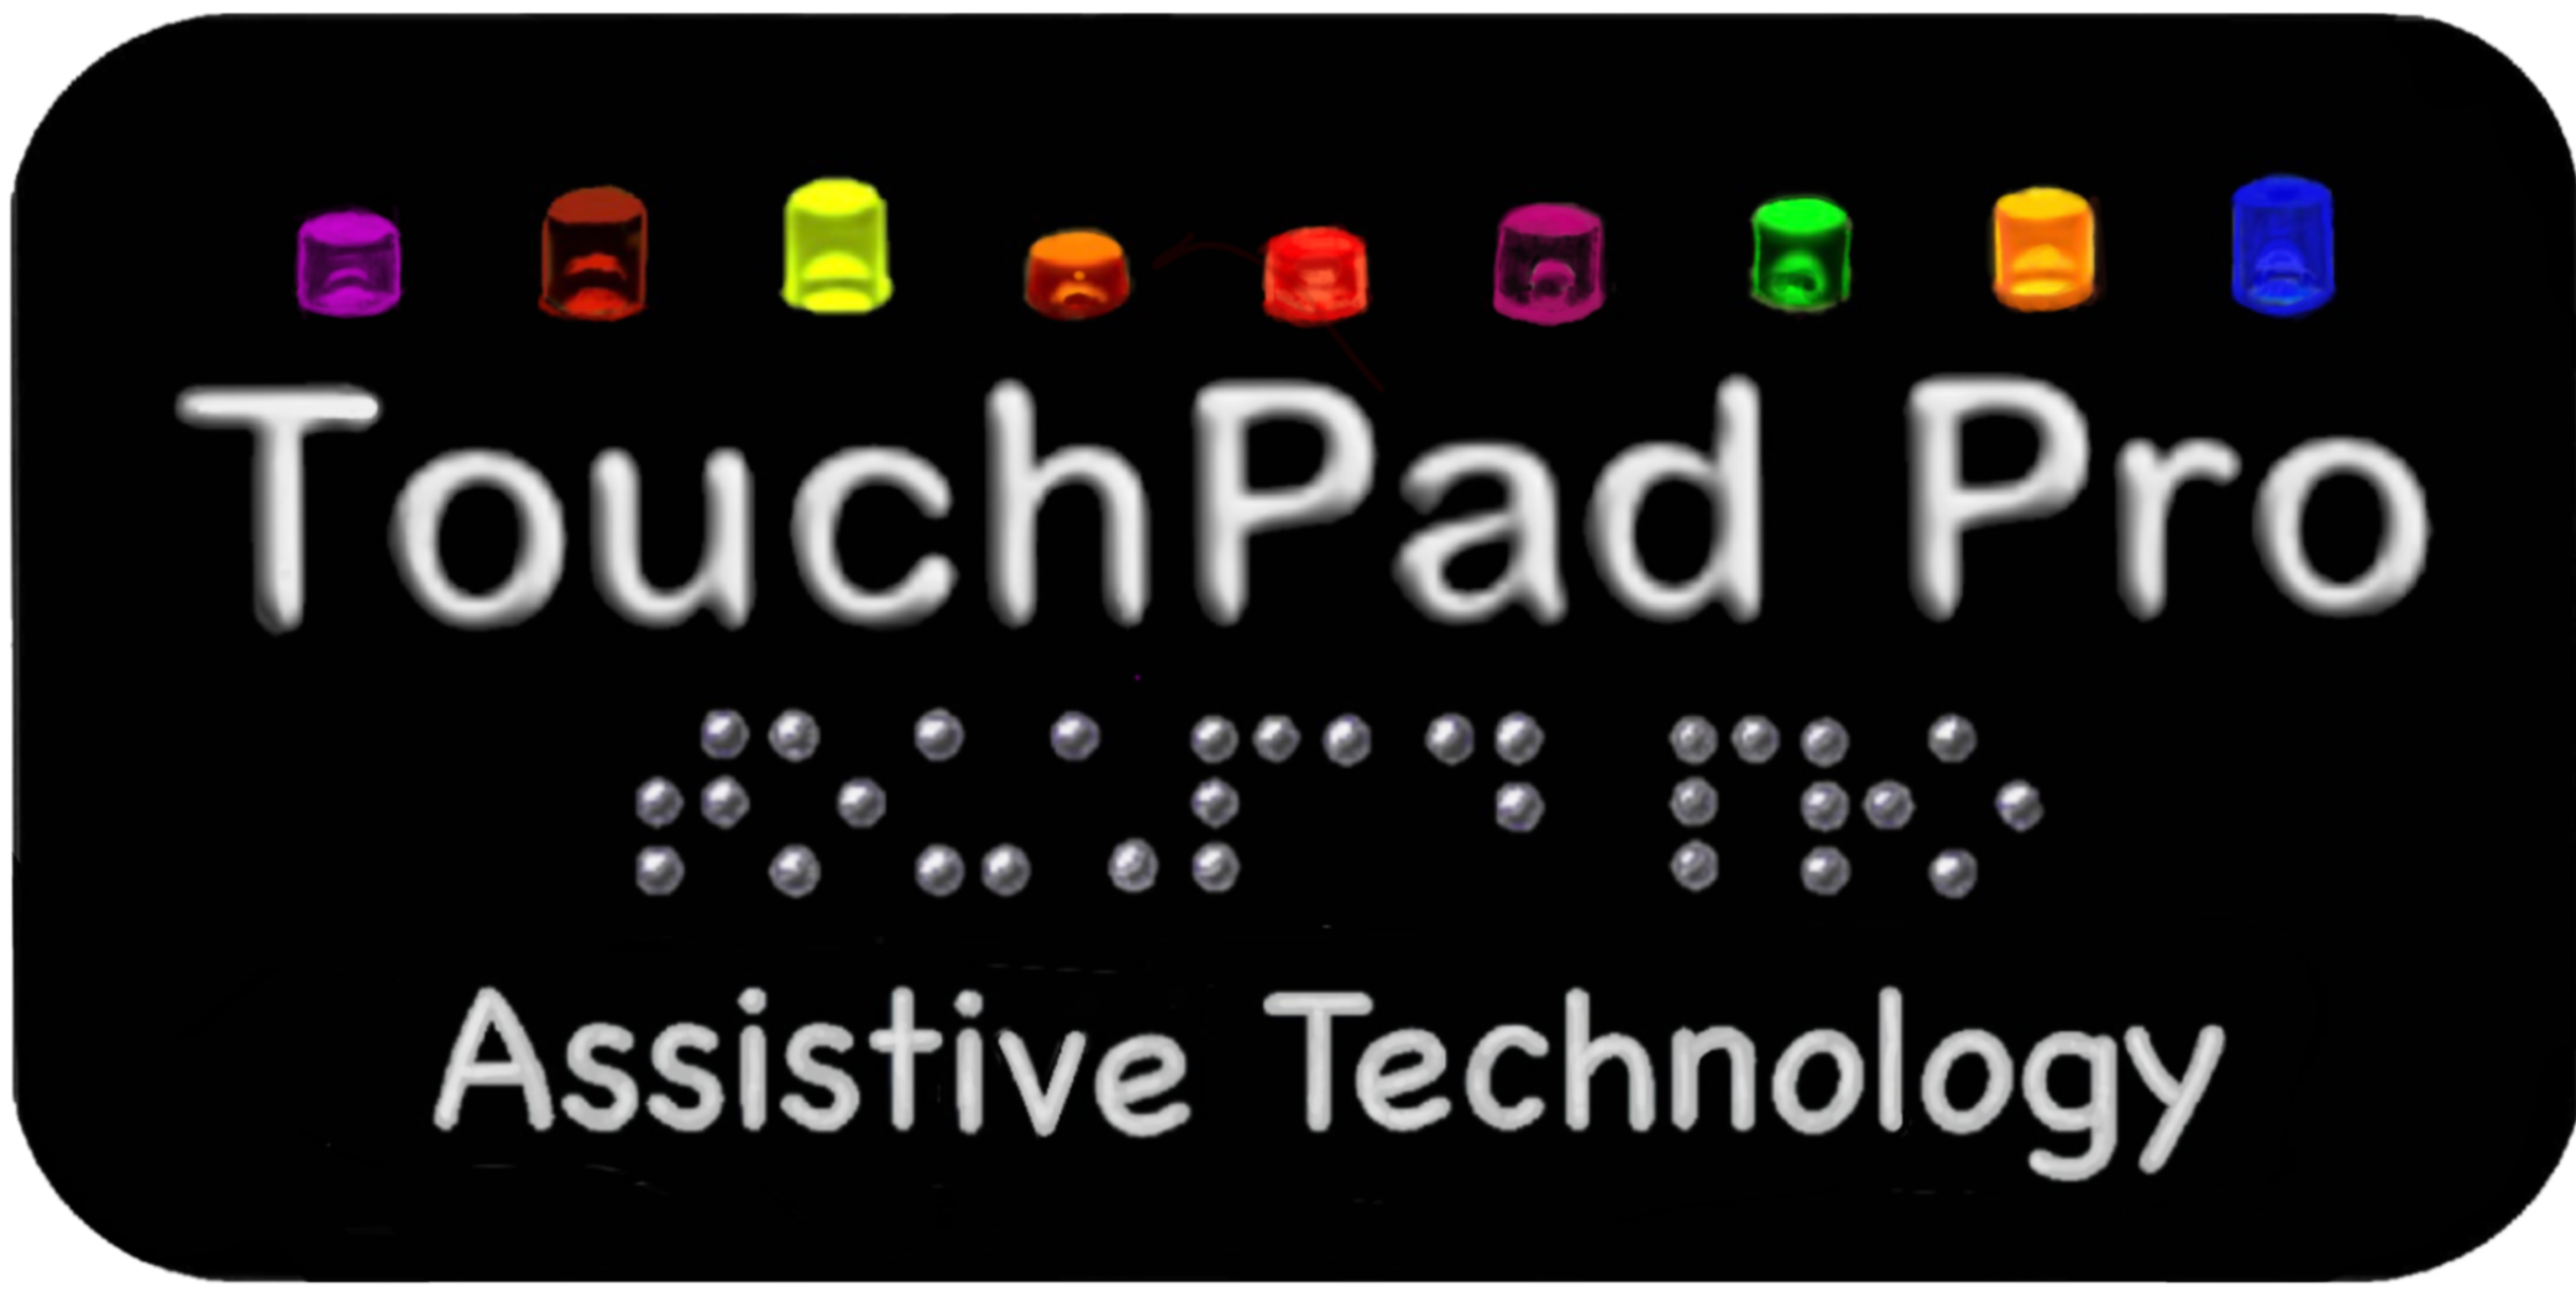 TouchPad Pro Assistive Technology Logo